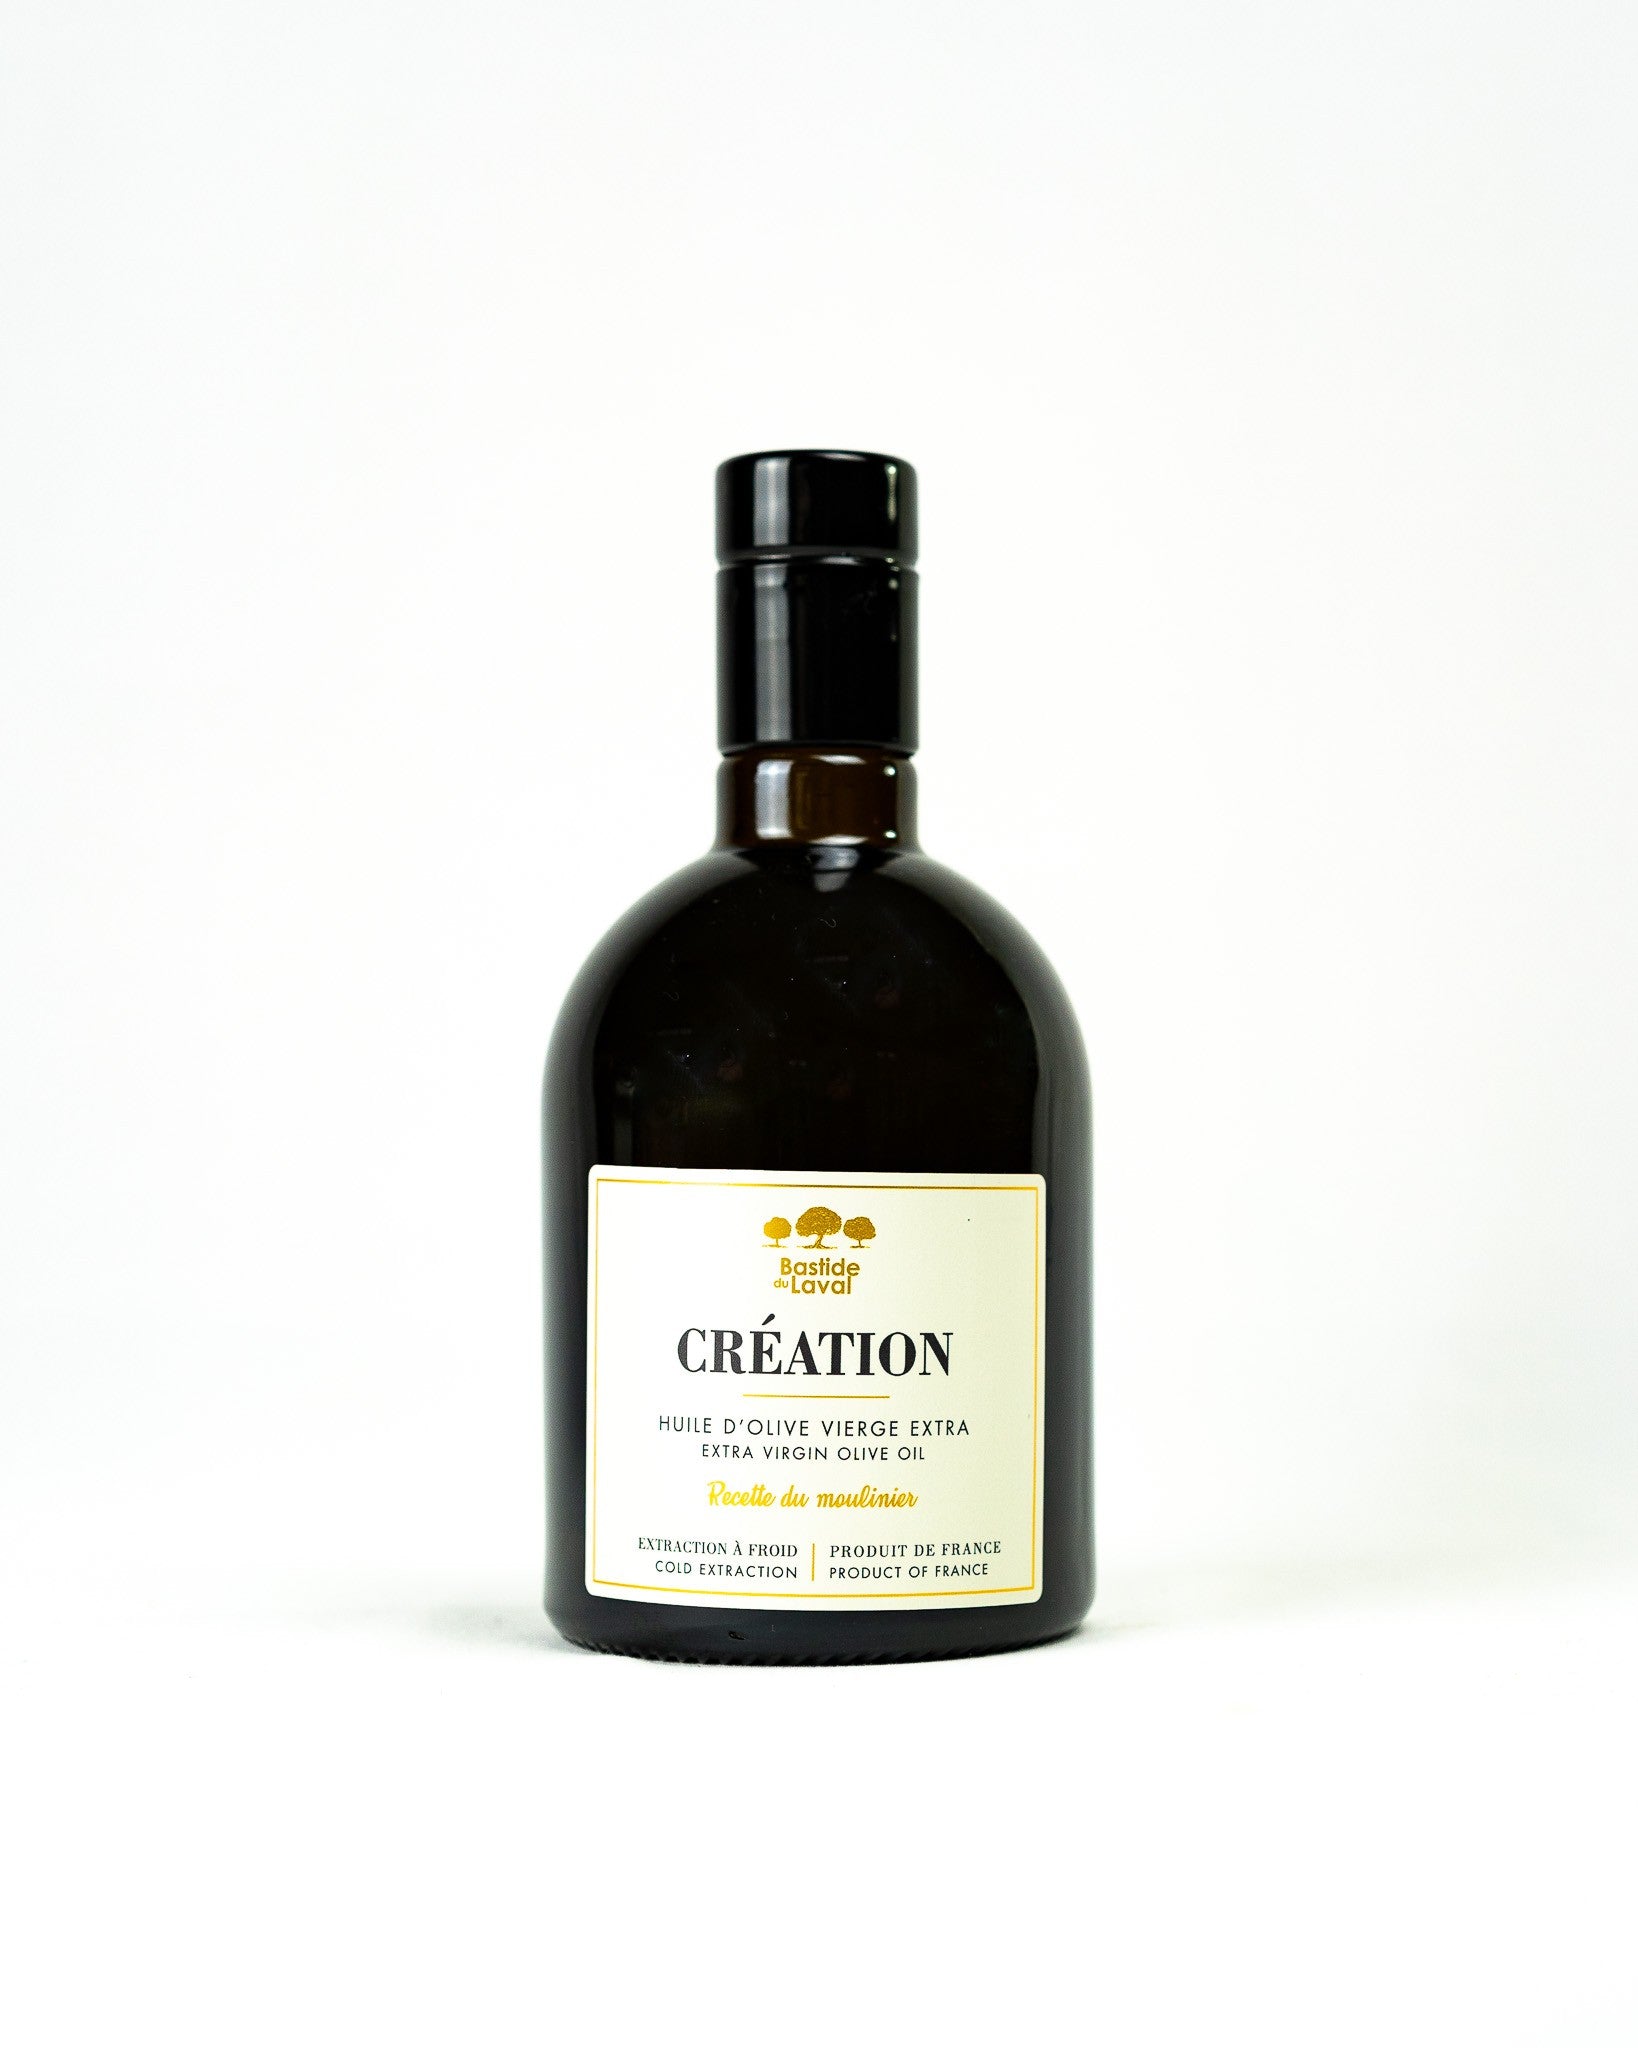 CREATION olive oil 50cl - New harvest